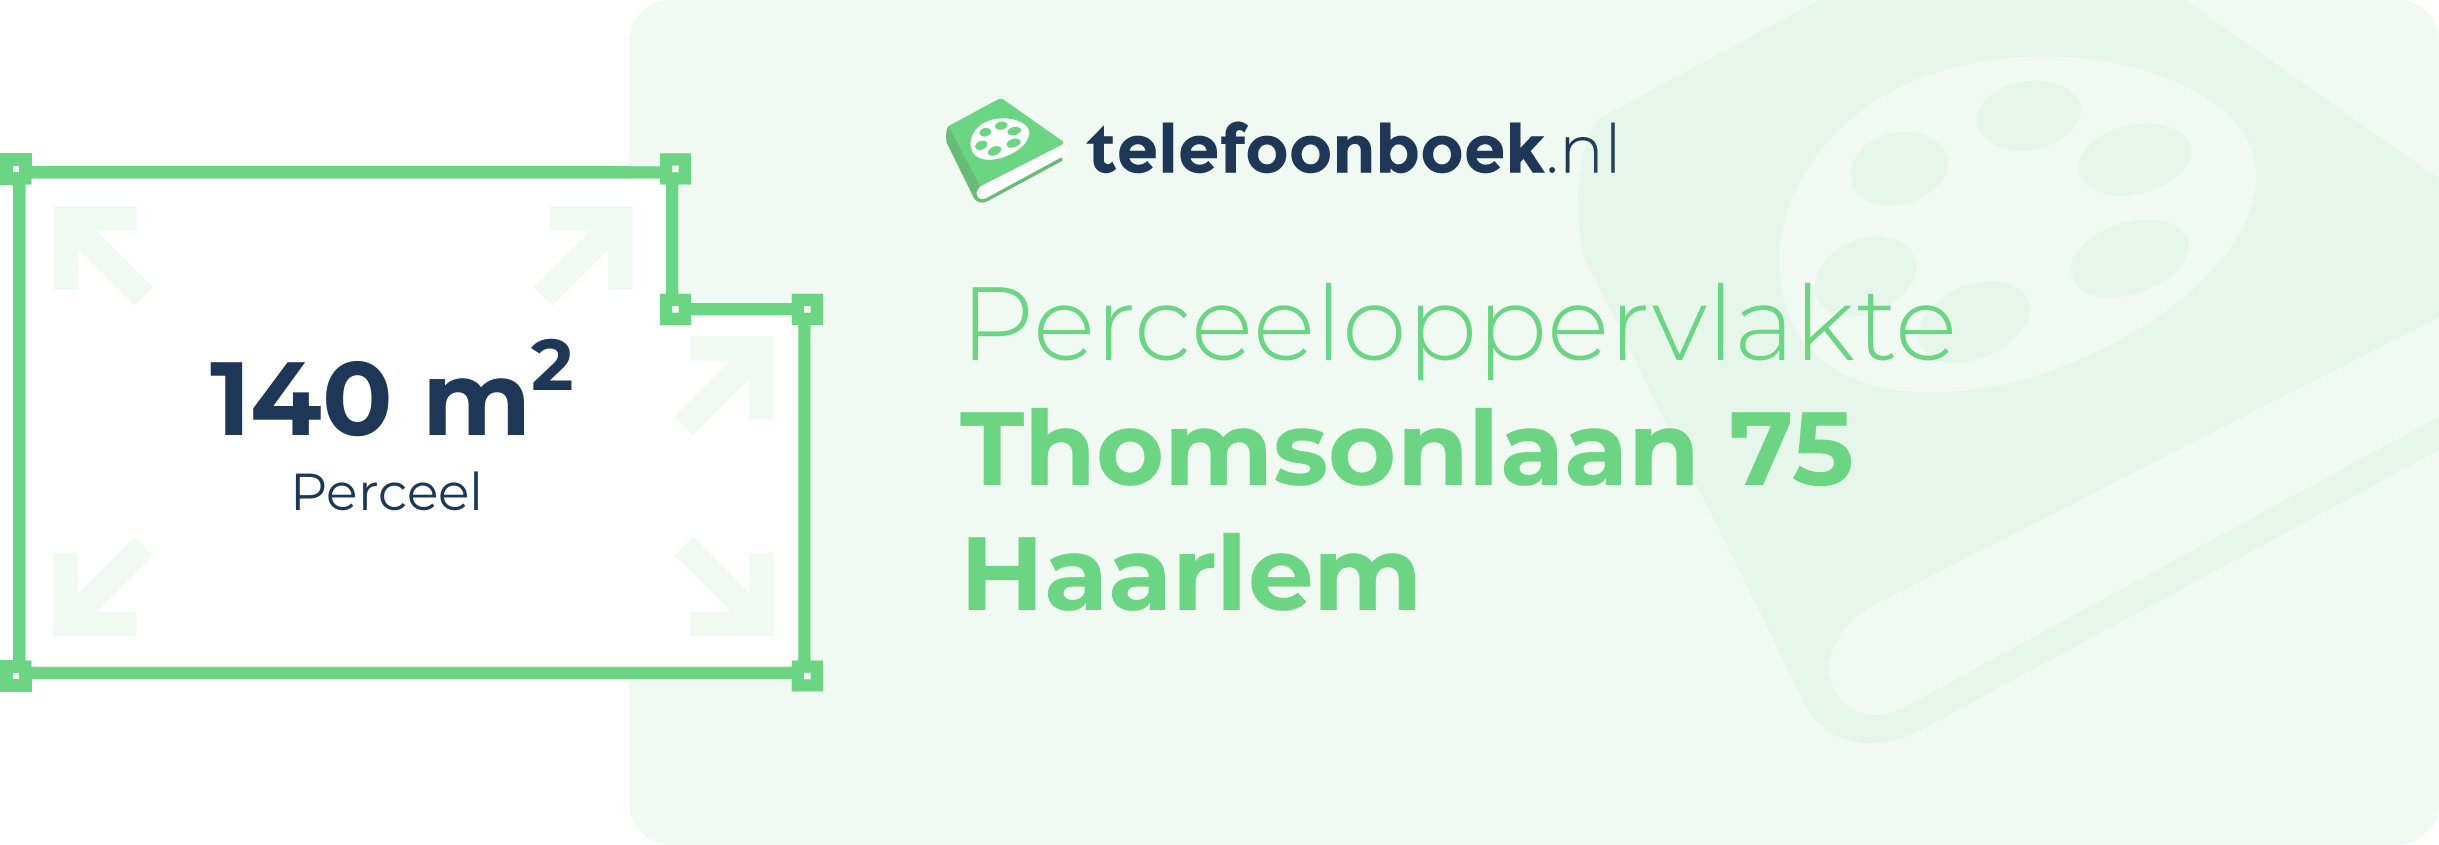 Perceeloppervlakte Thomsonlaan 75 Haarlem